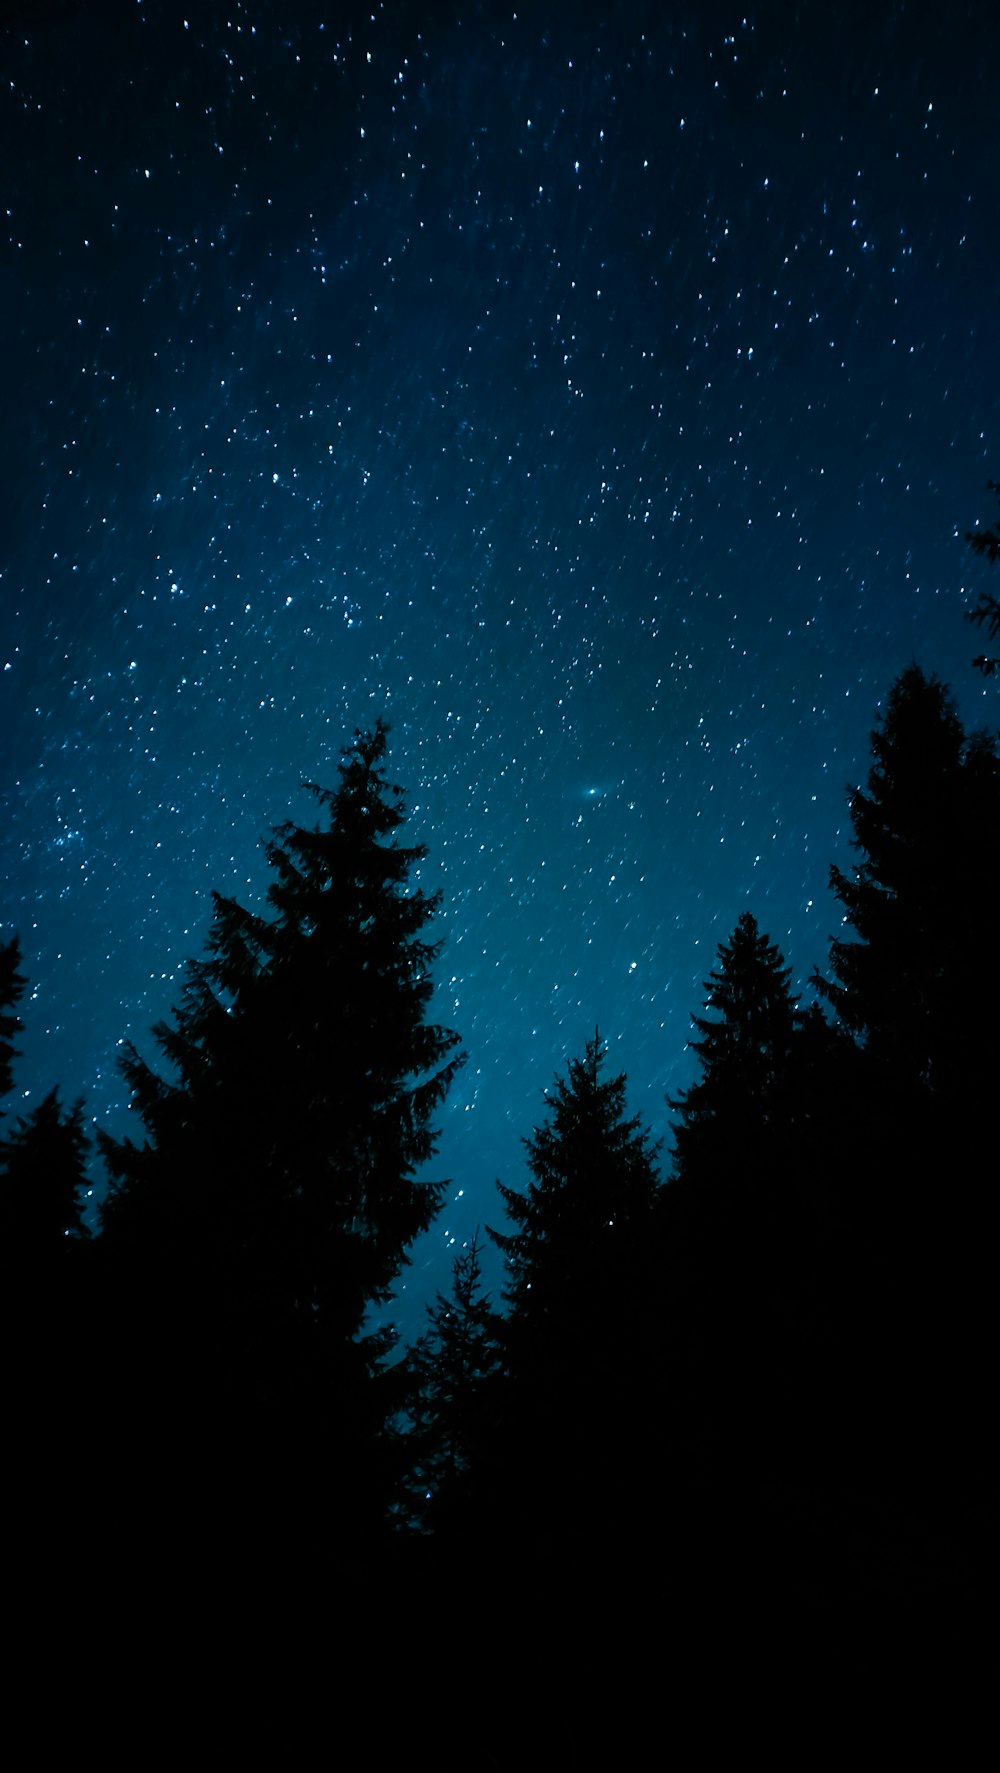 trees in the night sky